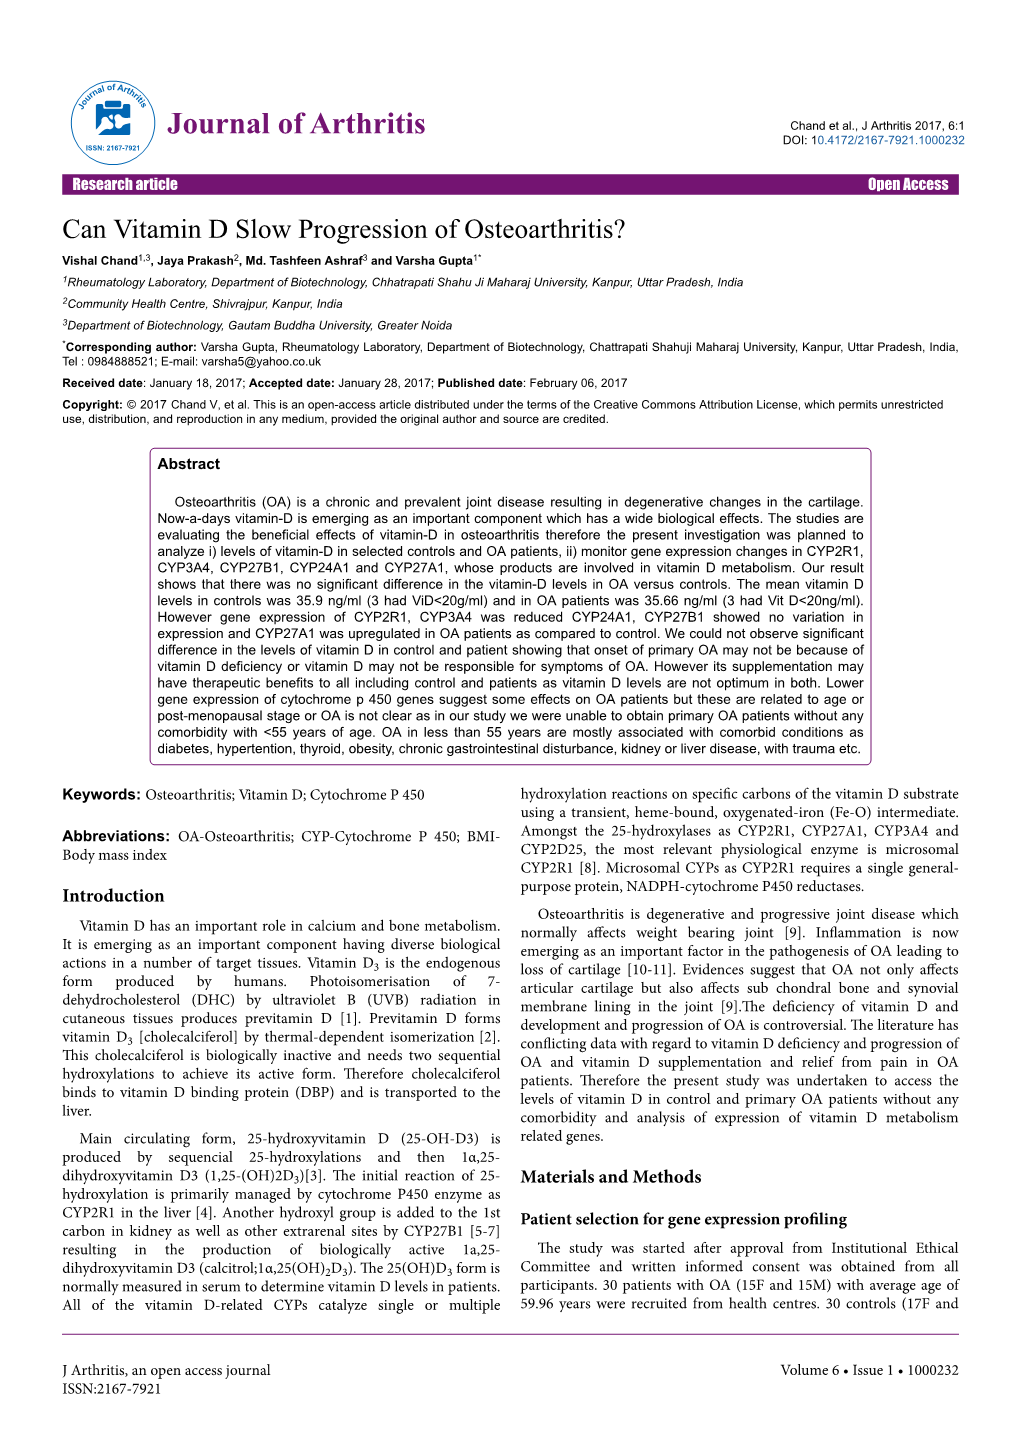 Can Vitamin D Slow Progression of Osteoarthritis? Vishal Chand1,3, Jaya Prakash2, Md